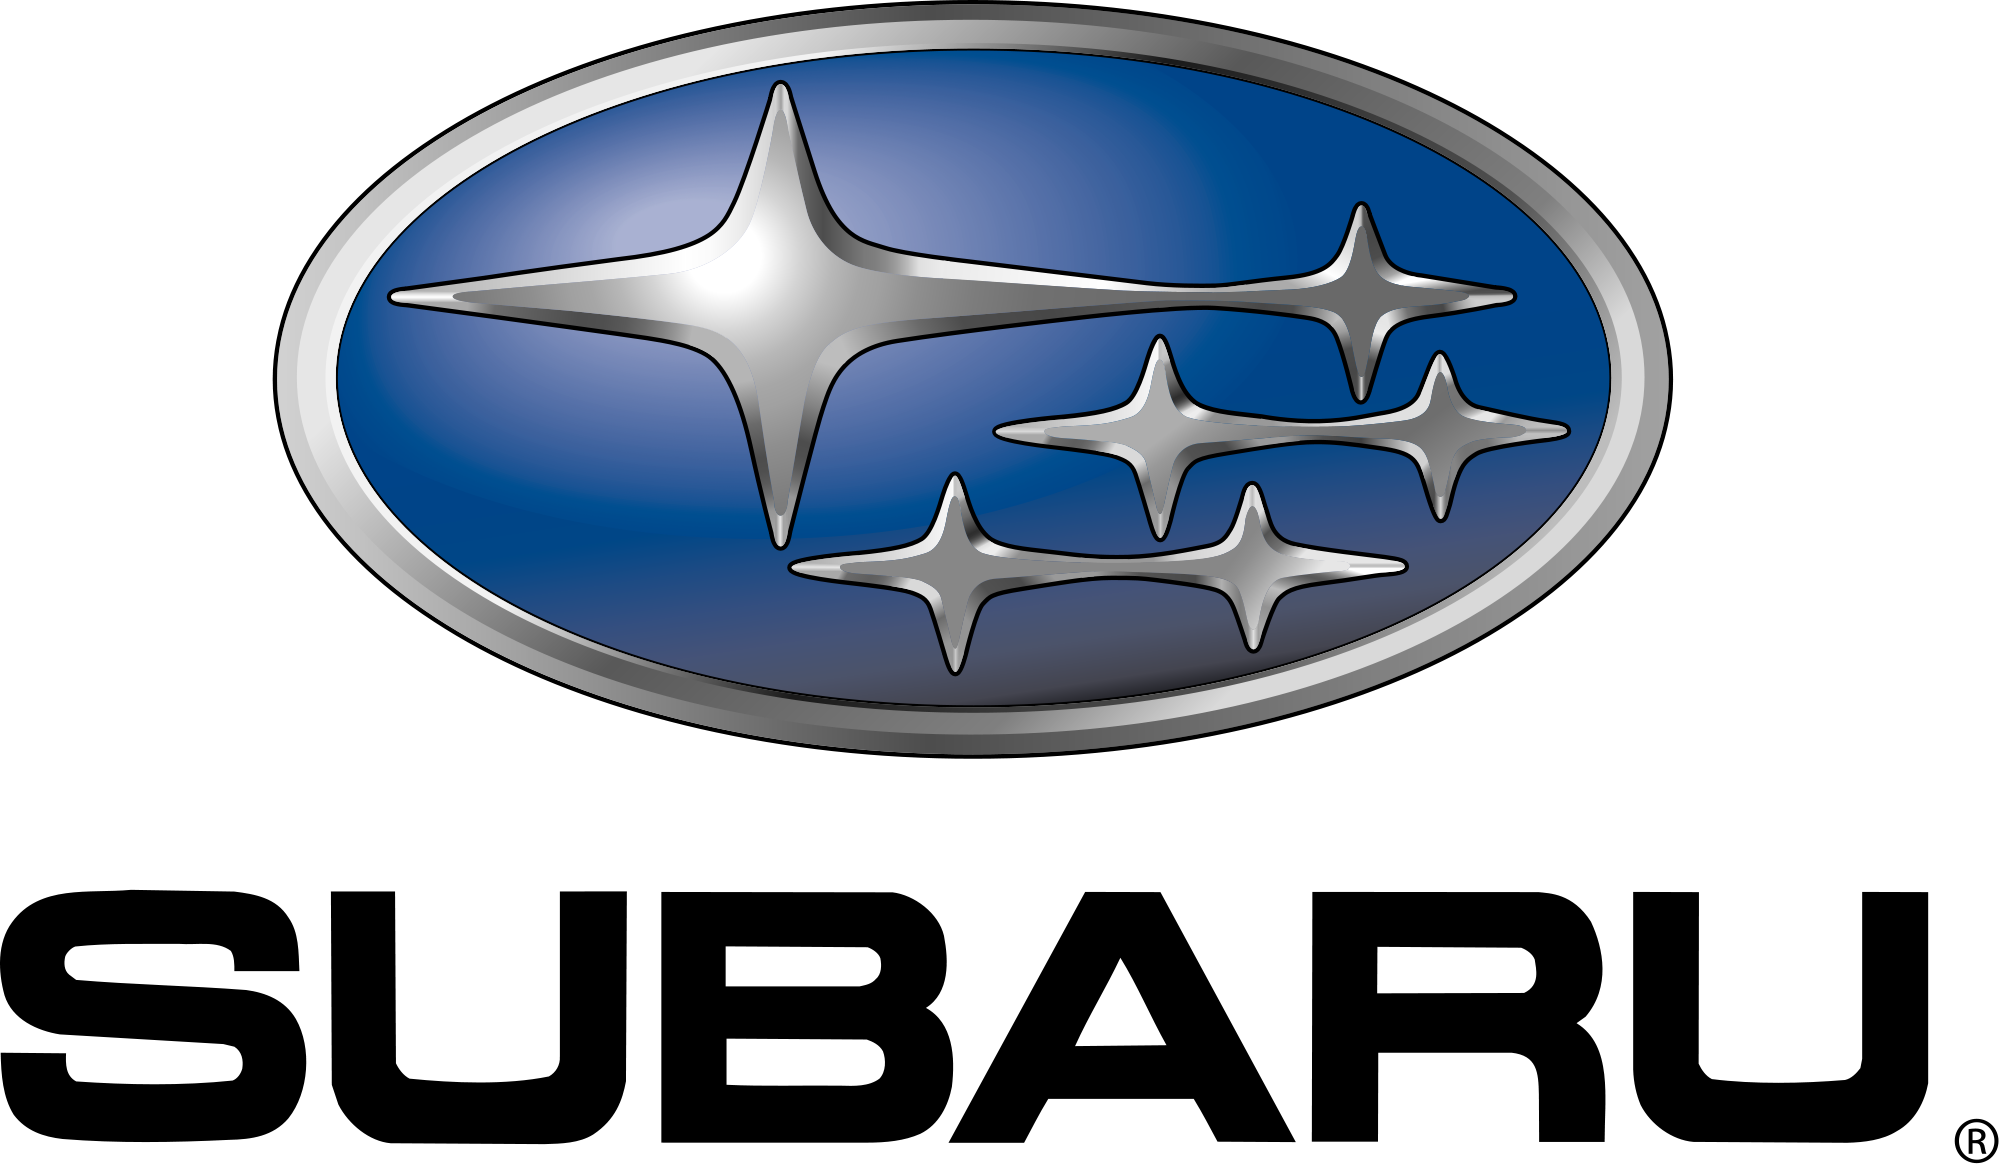 Subaru-Logo.png